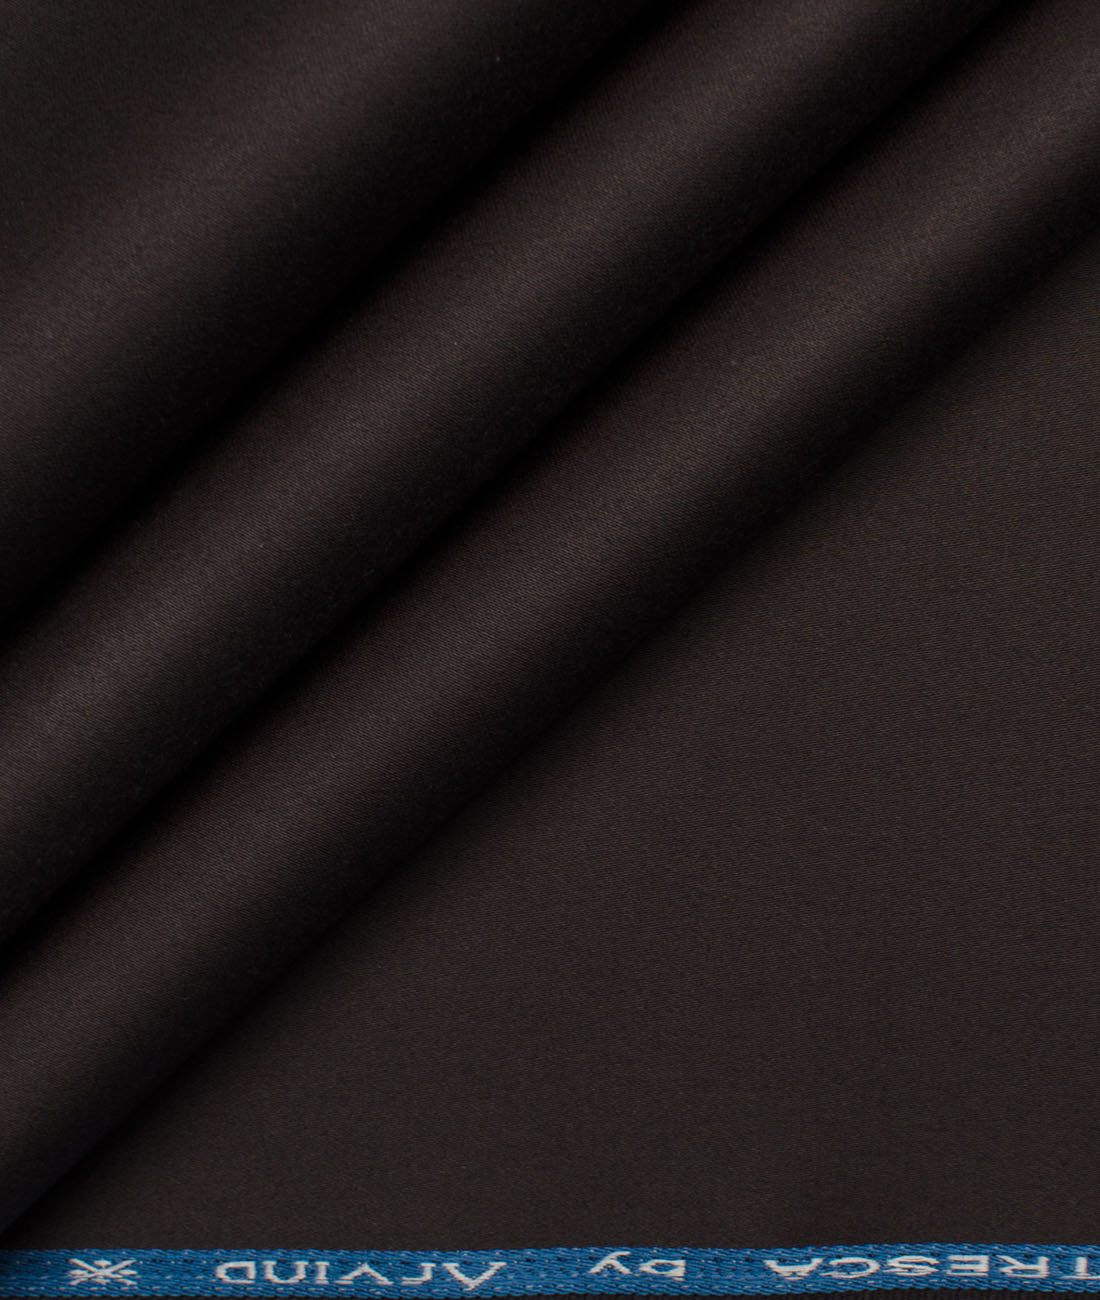 Buy Kurus Mens Darkgrey Solid Cotton Blend Formal Trouser Online at Best  Prices in India  JioMart